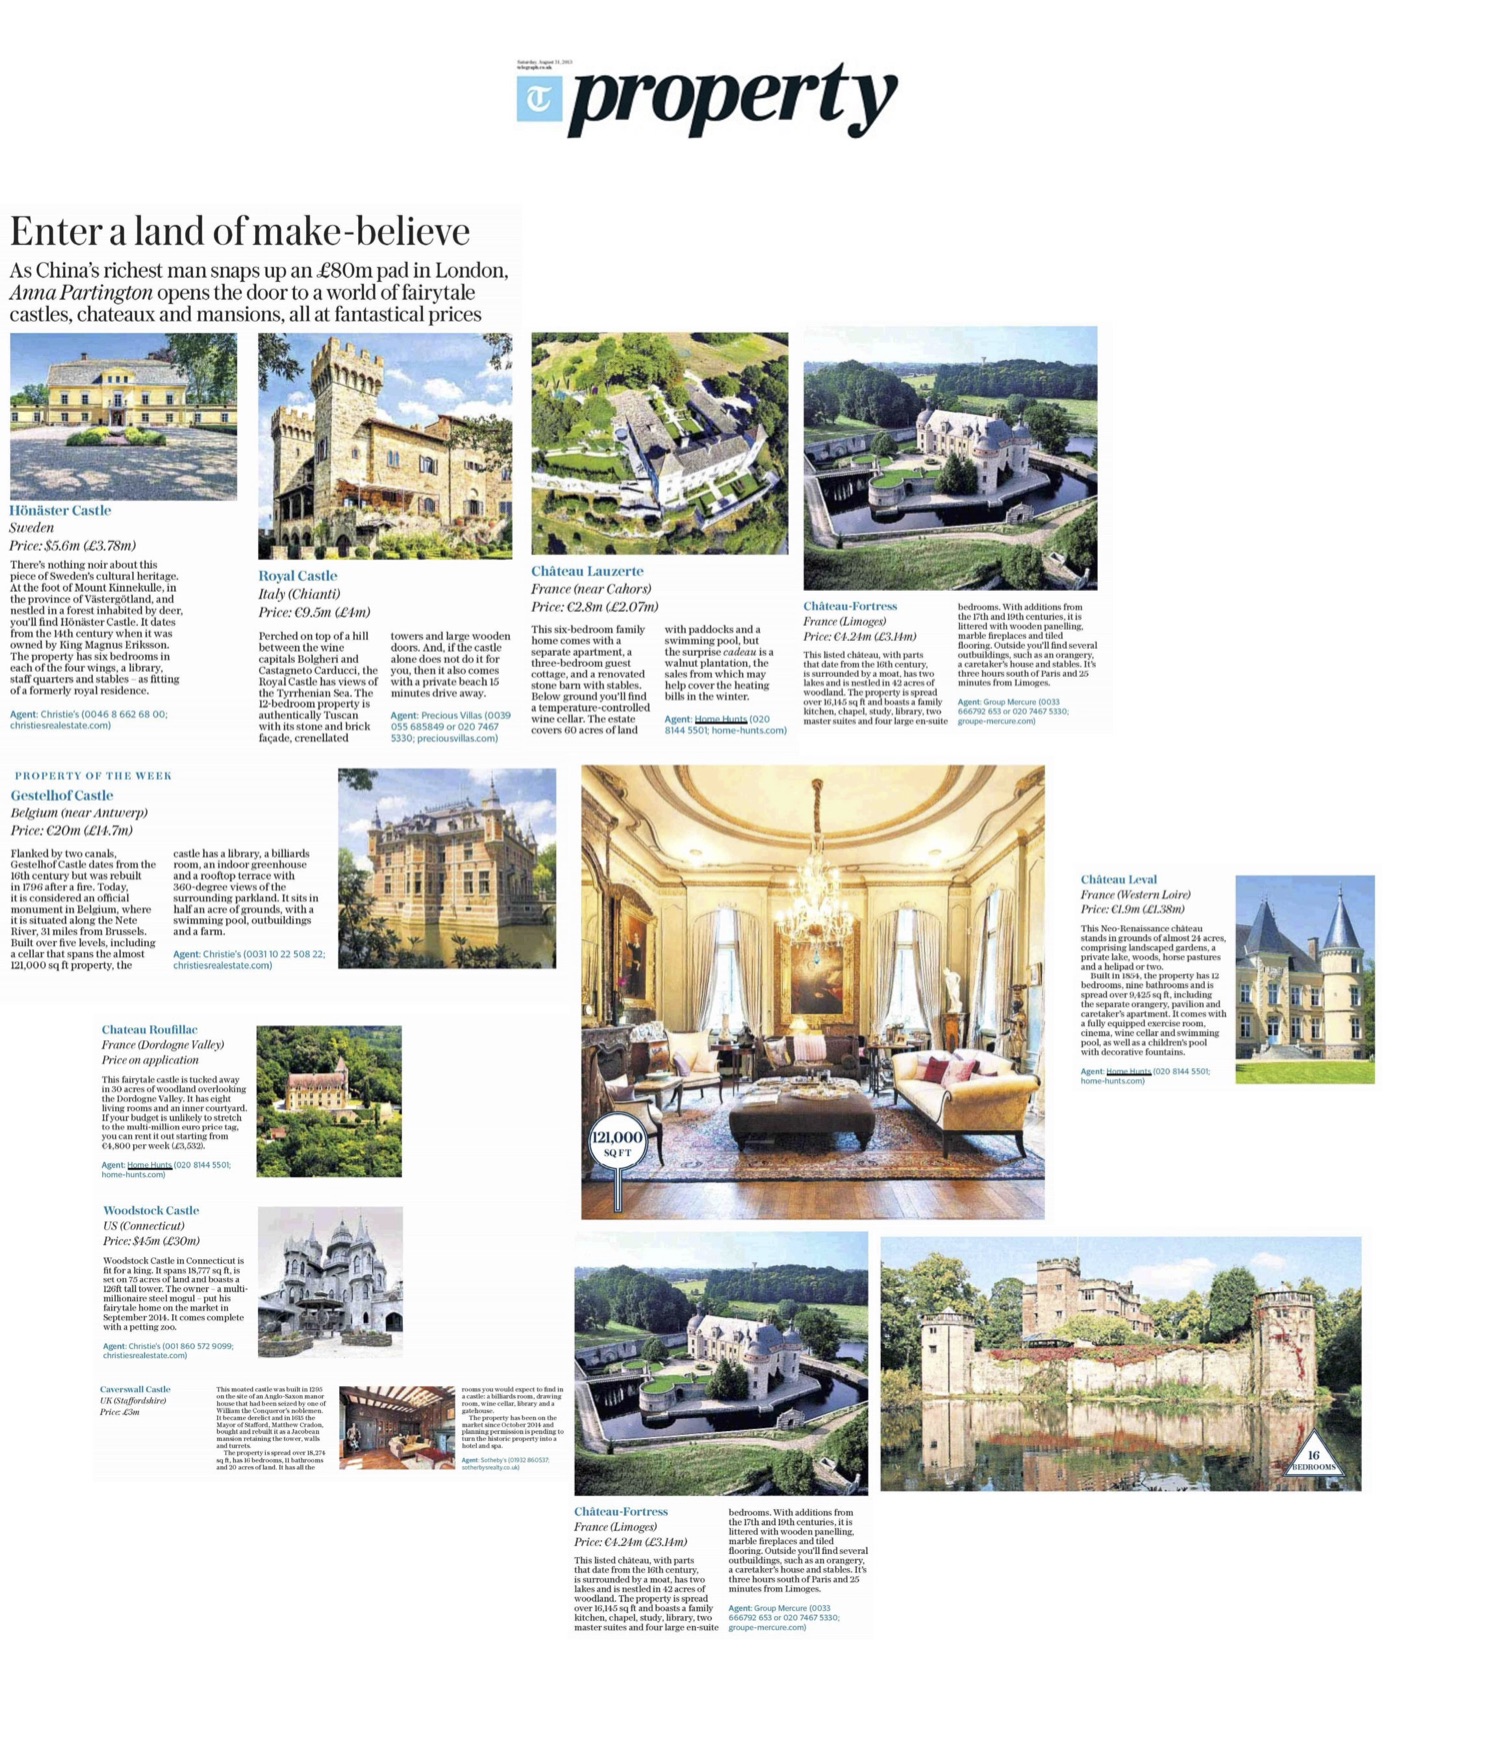 Daily Telegraph – Fairytale castles for sale